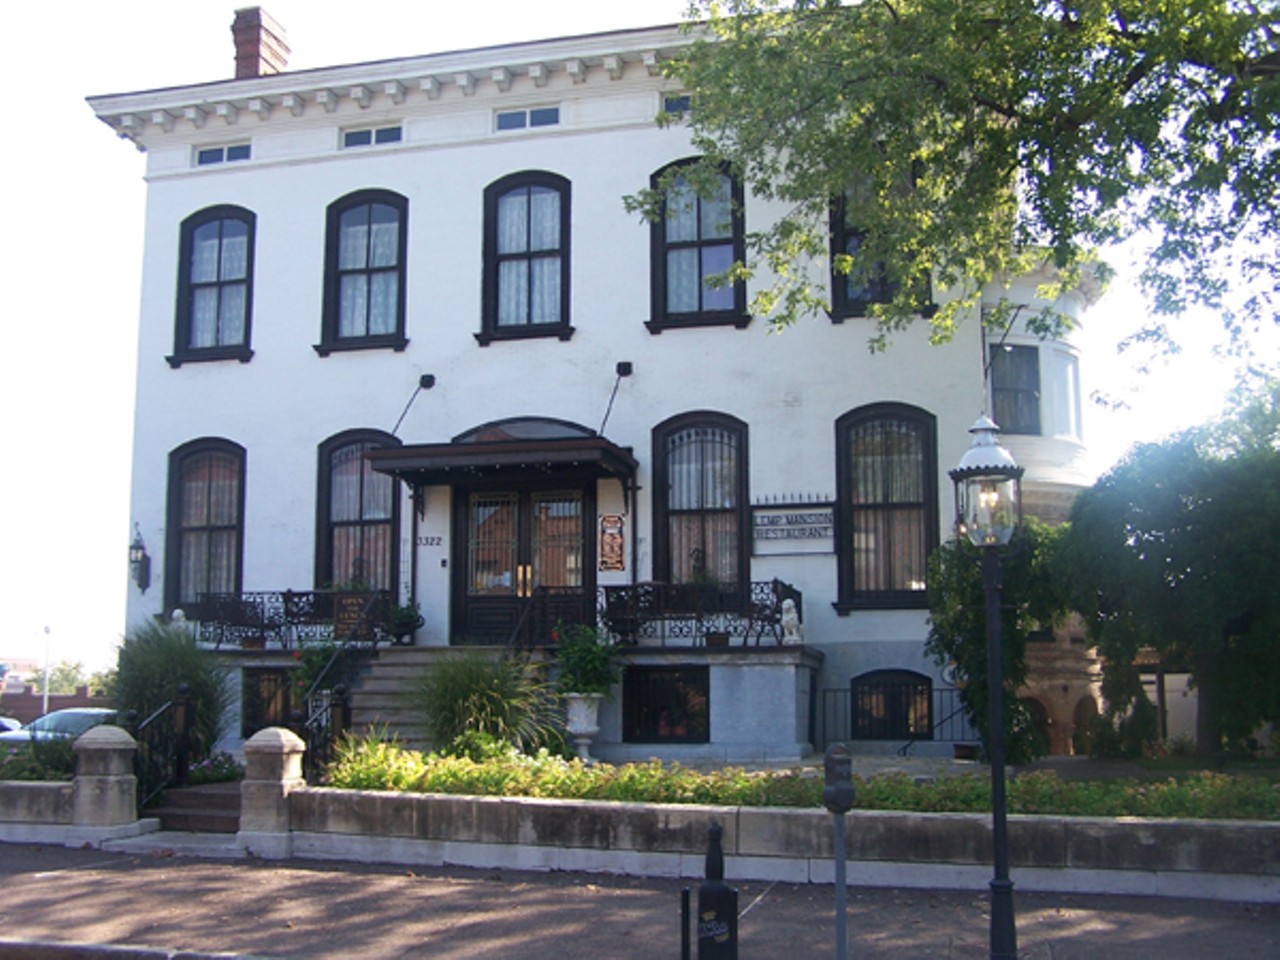 Lemp Mansion Restaurant & Inn | St. Louis - South City | American, Bars and Clubs | Restaurants